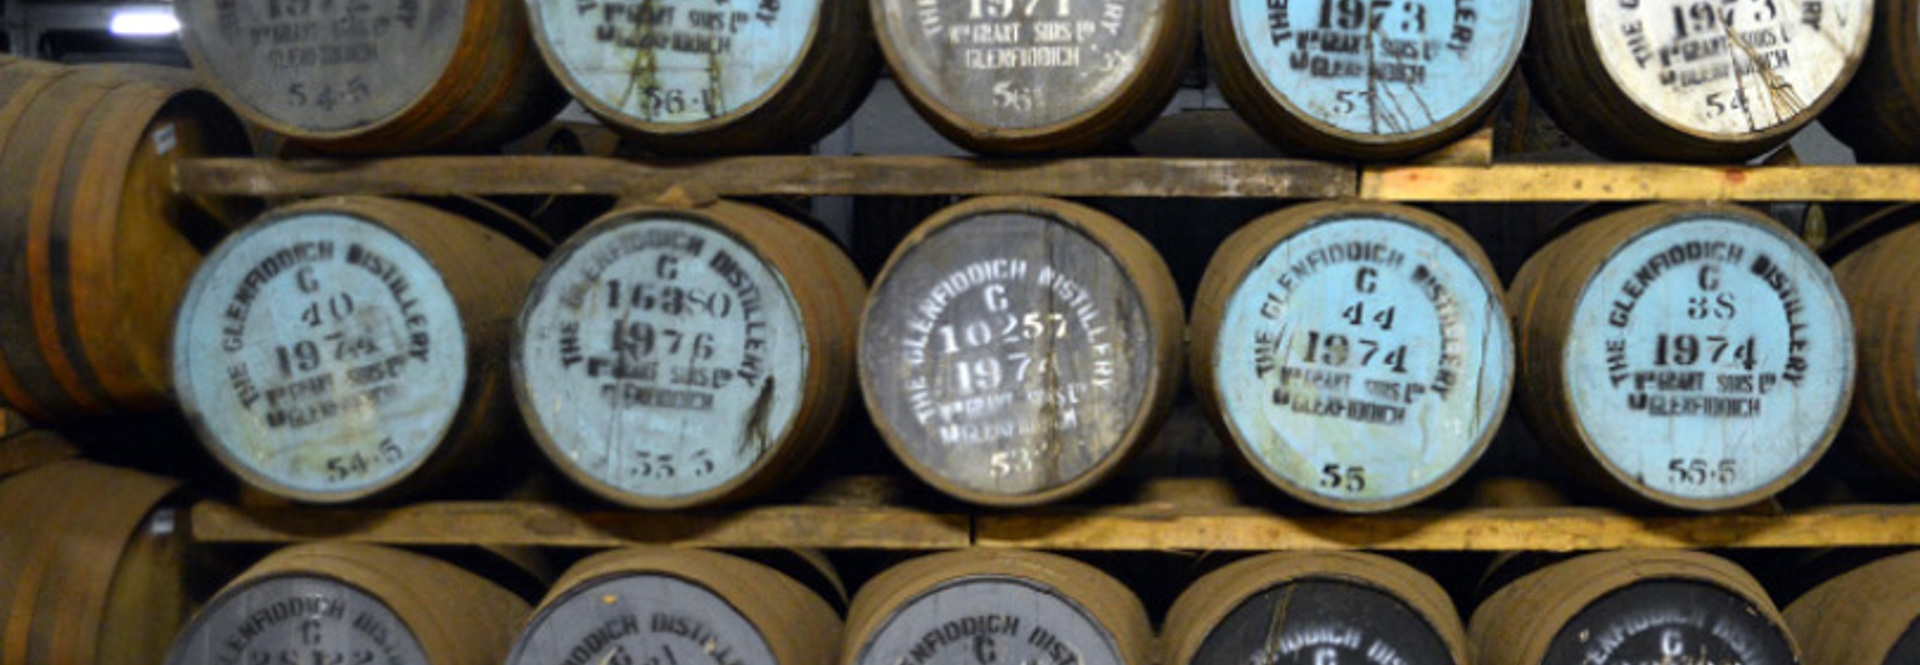 Whisky Cask Storage - Cask Trade